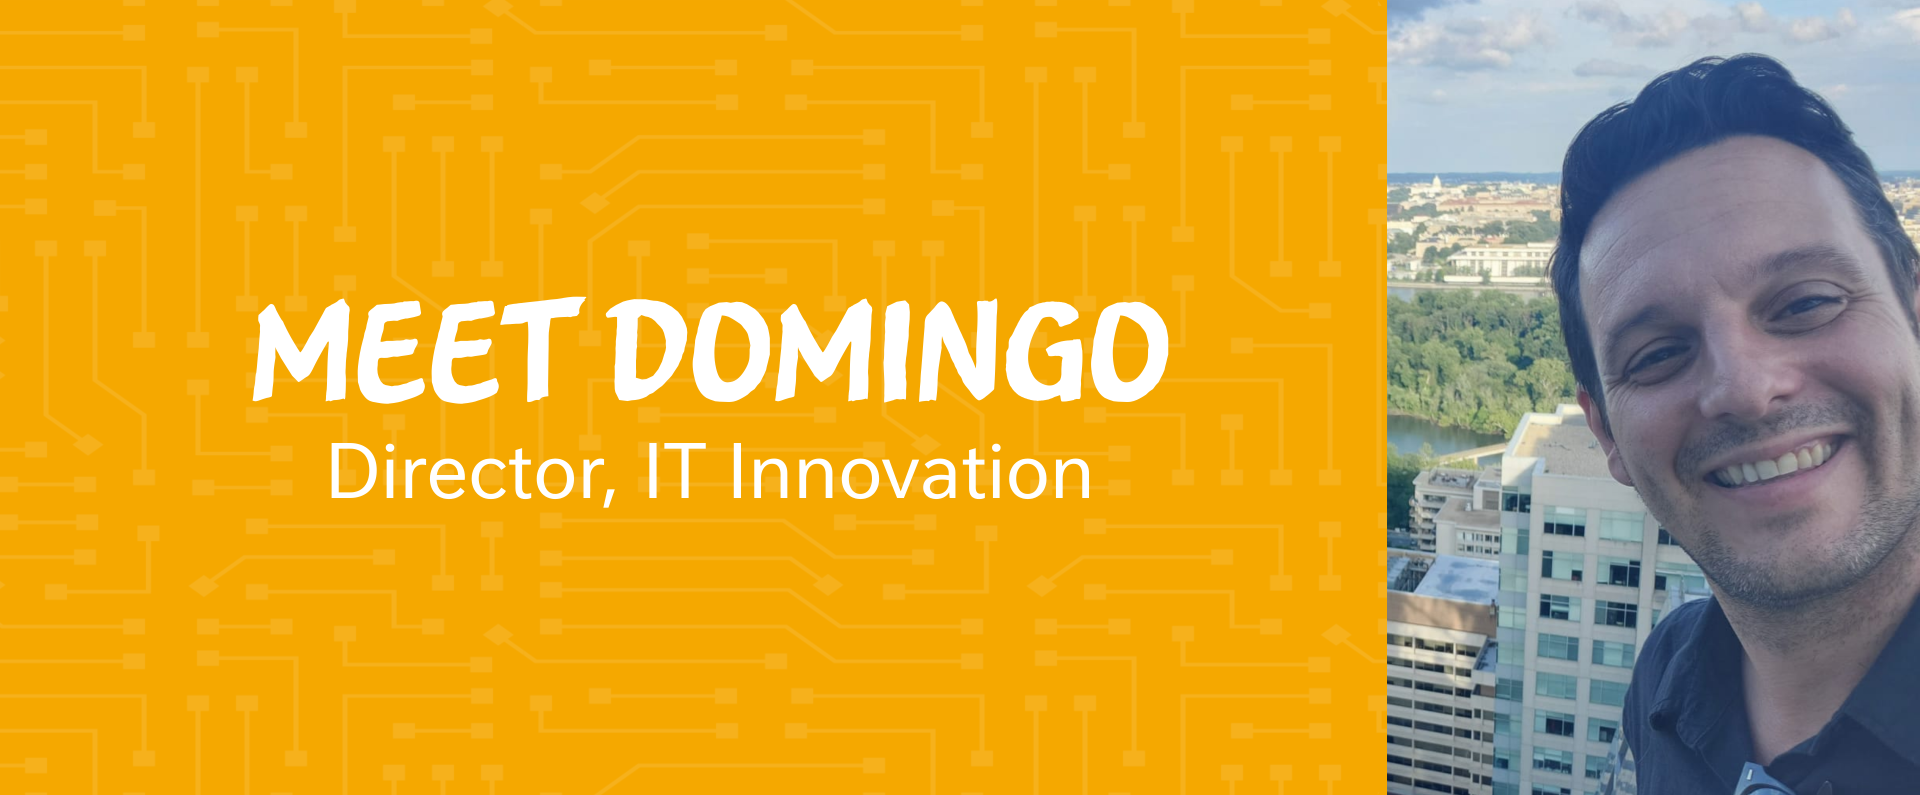 Meet Domingo, Director of IT Innovation - Nestlé IT Careers 